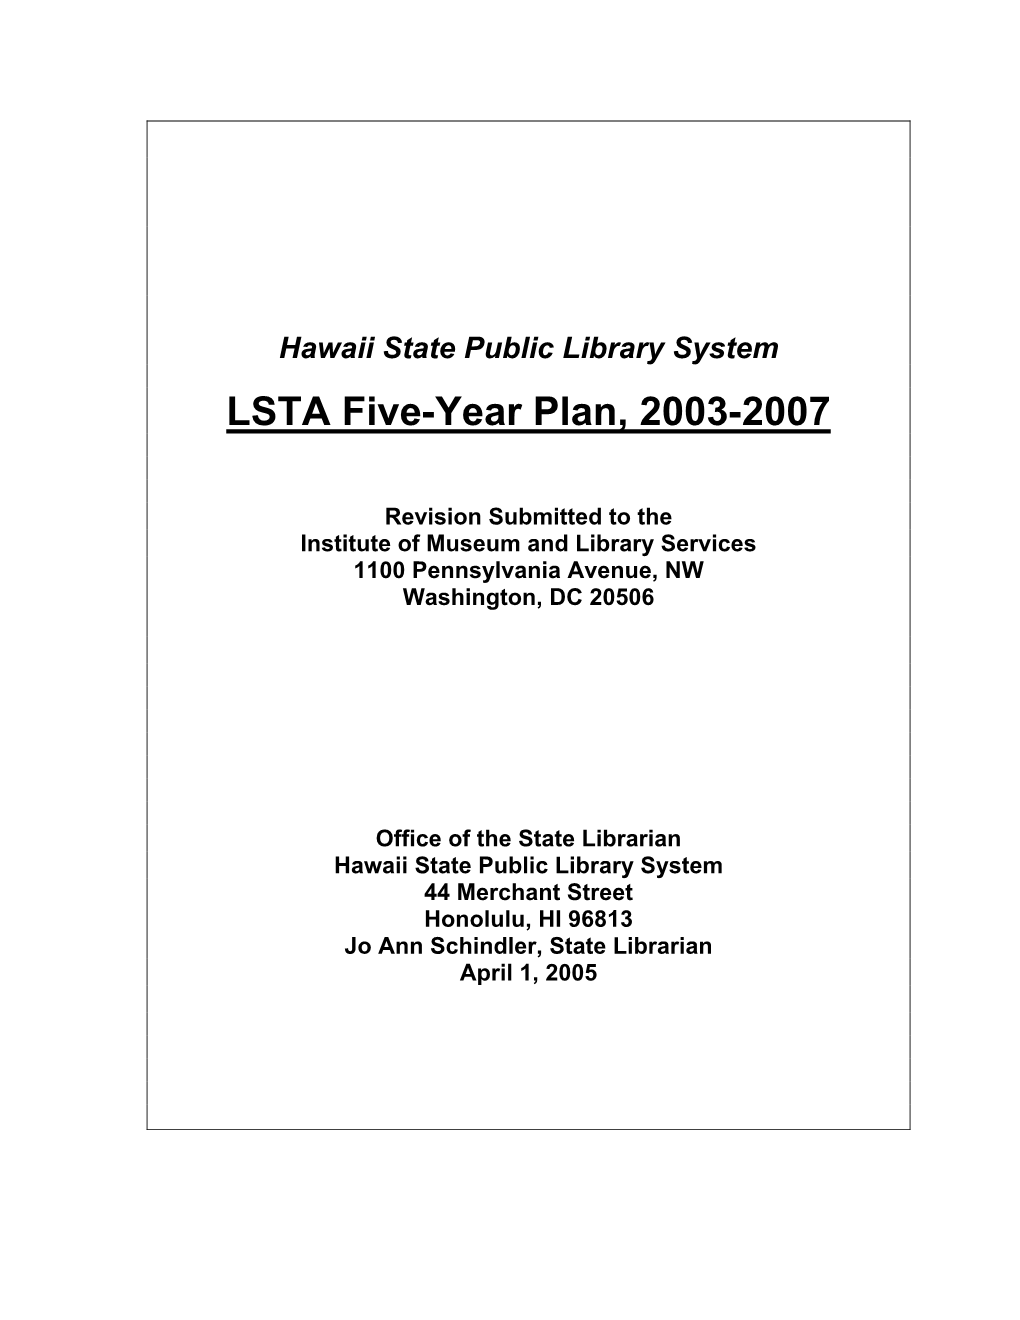 LSTA Five-Year Plan, 2003-2007